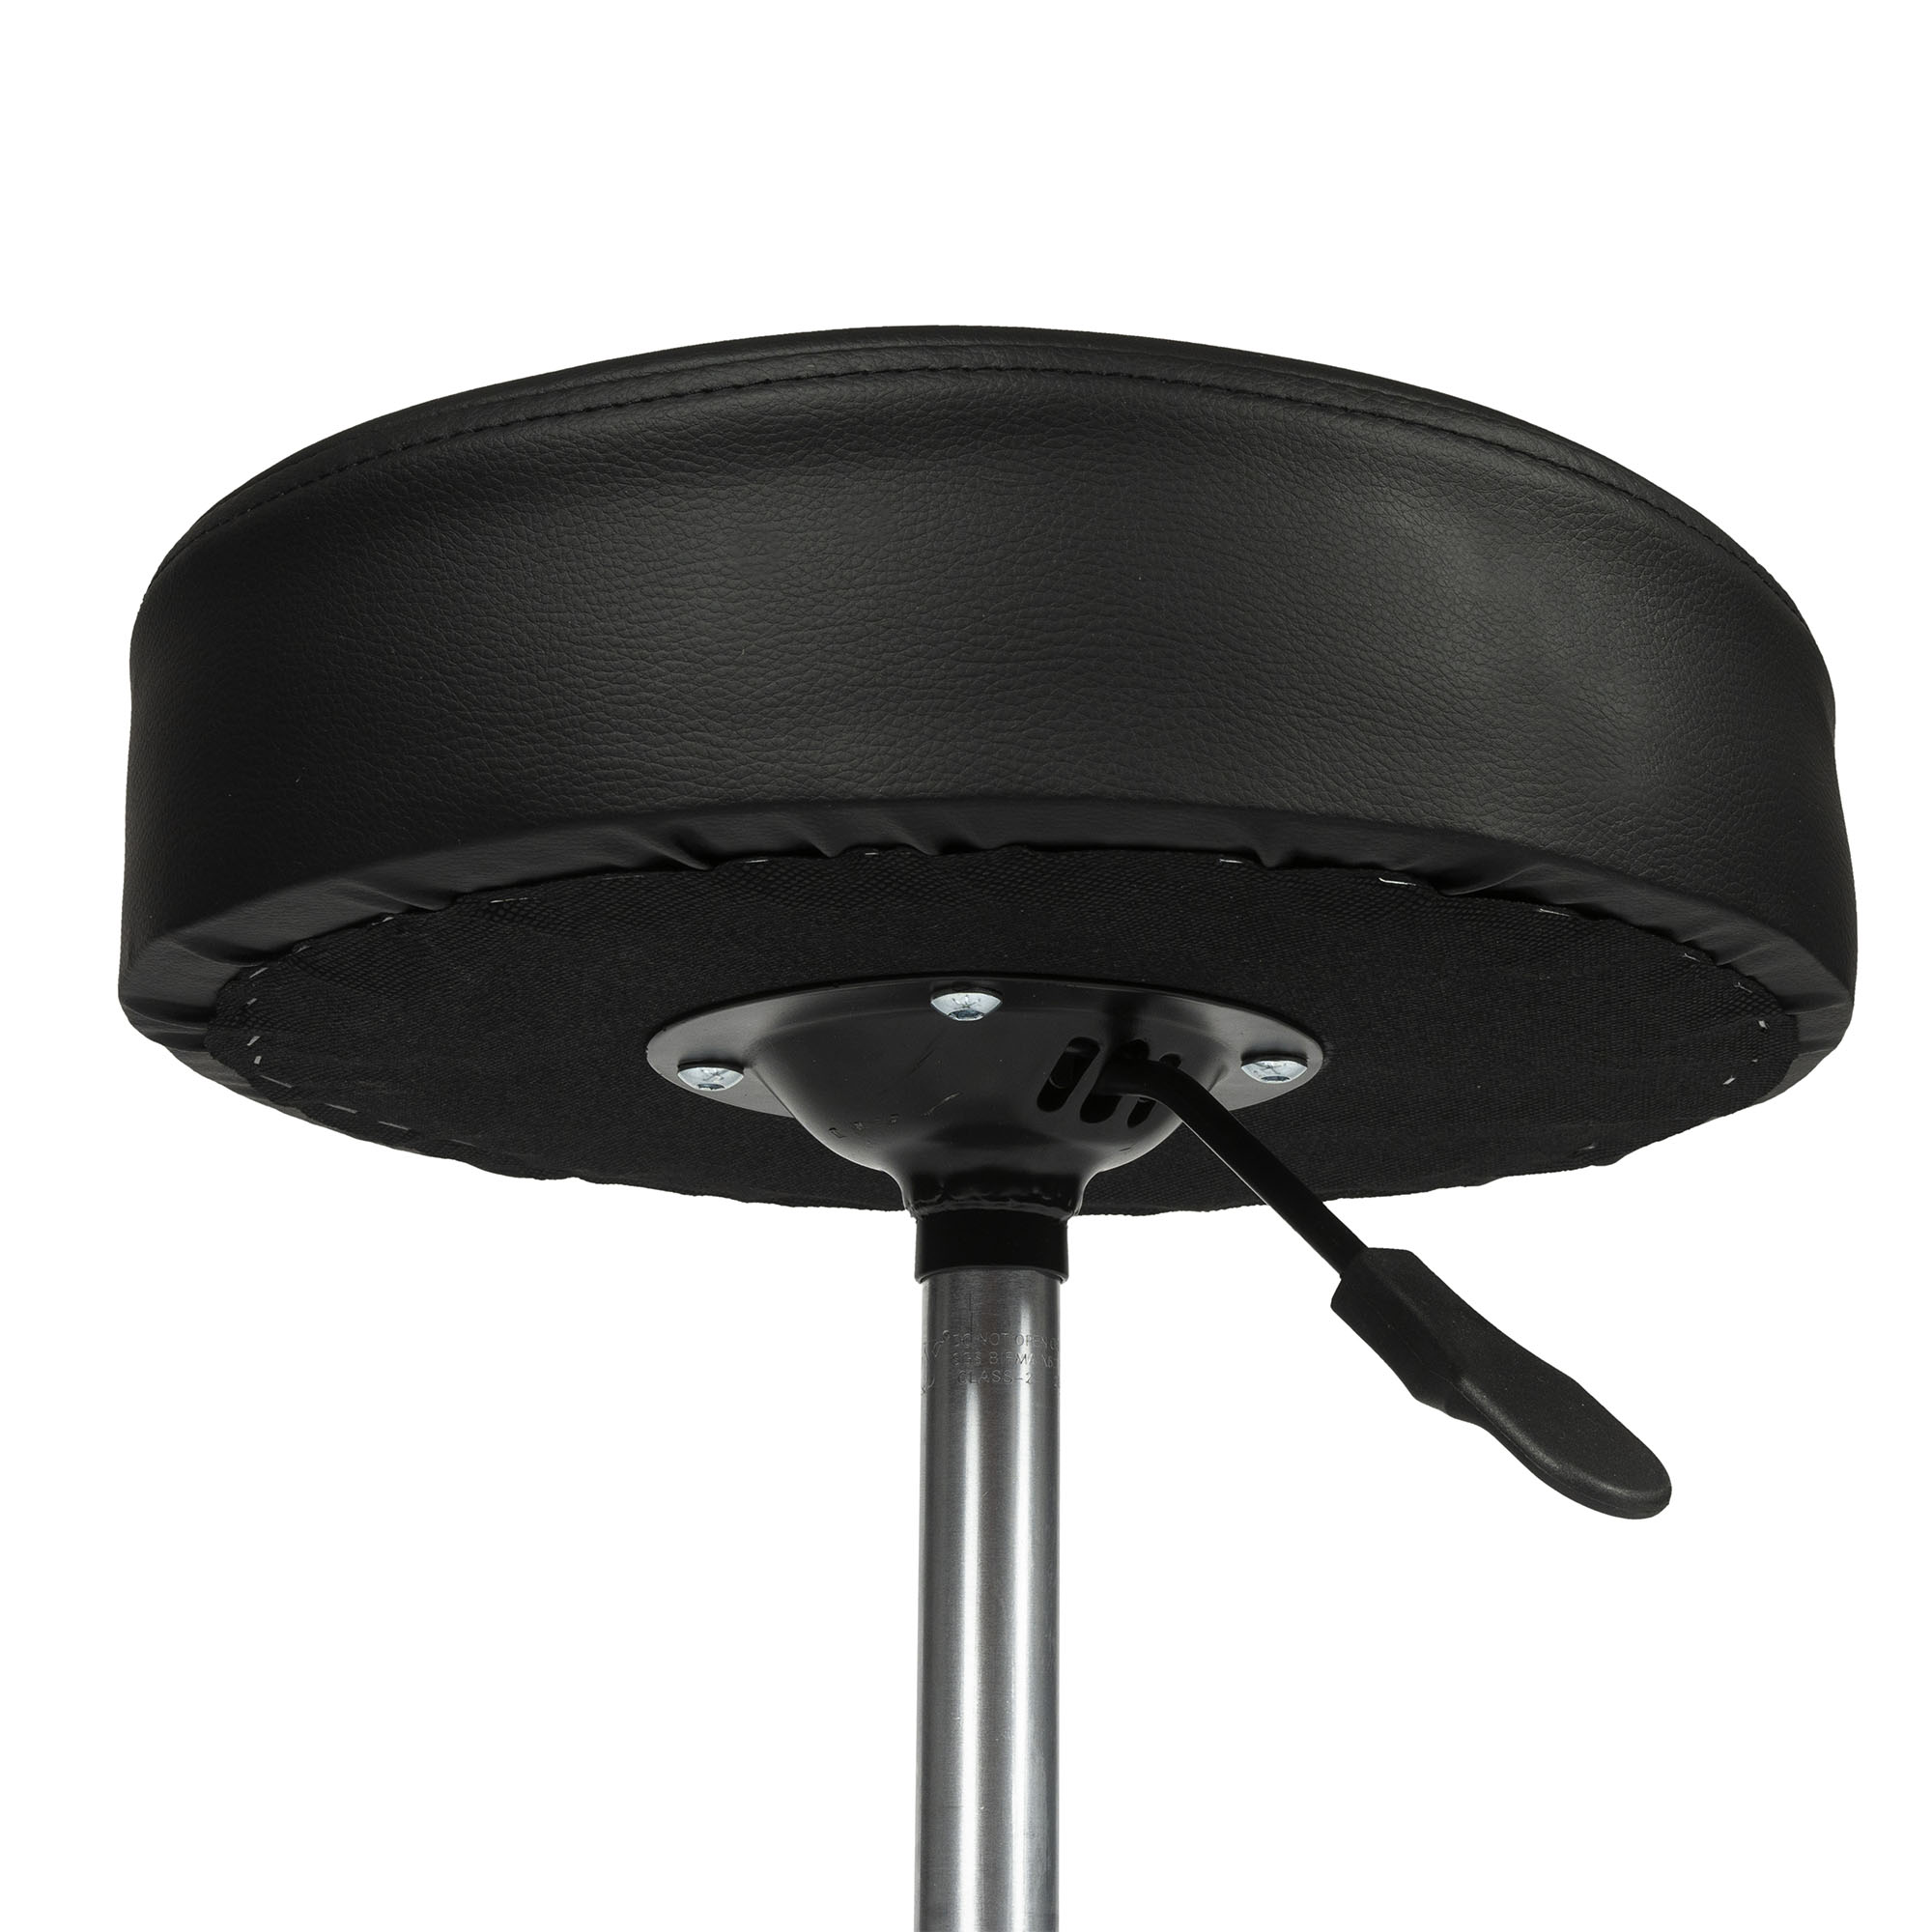 dunimed work stool with wheels adjustability